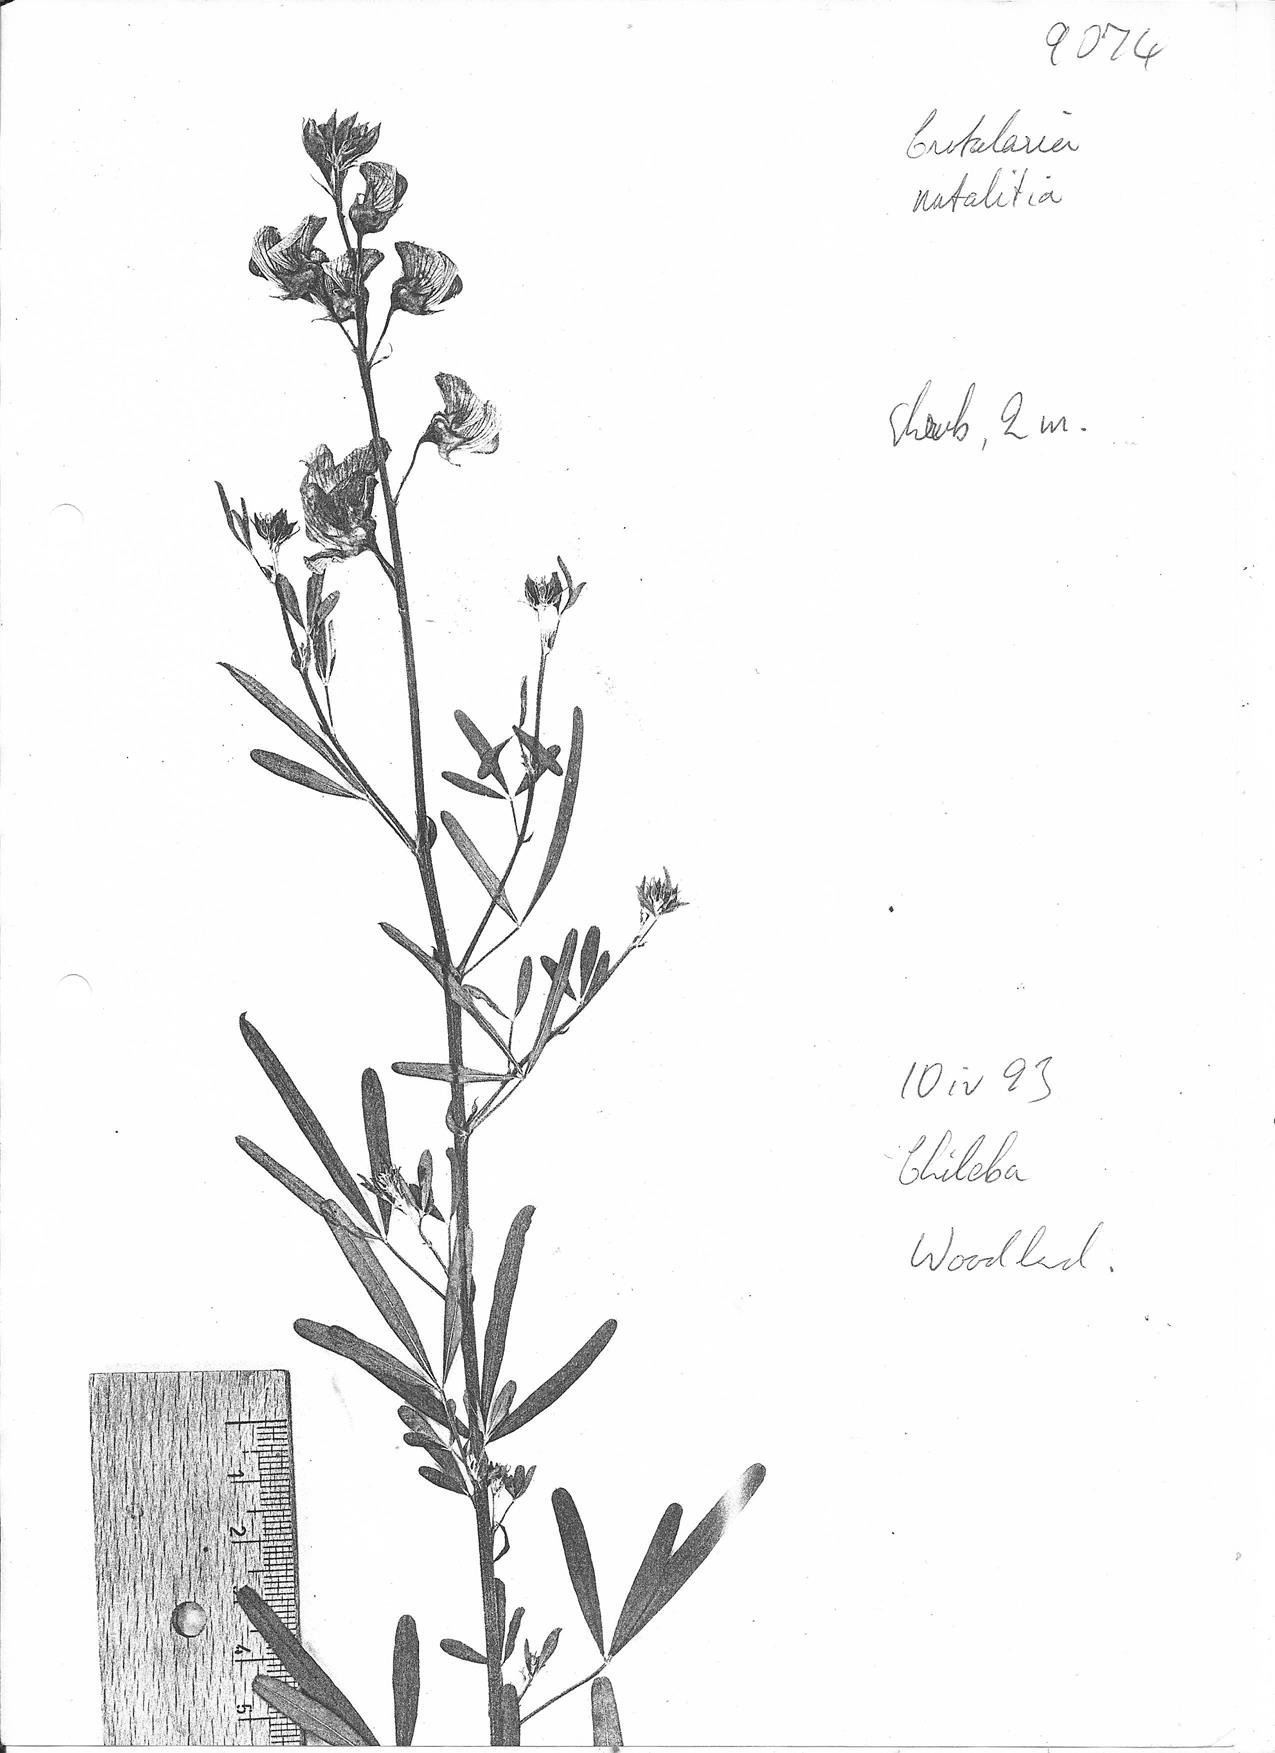 Crotalaria natalitia var. natalitia